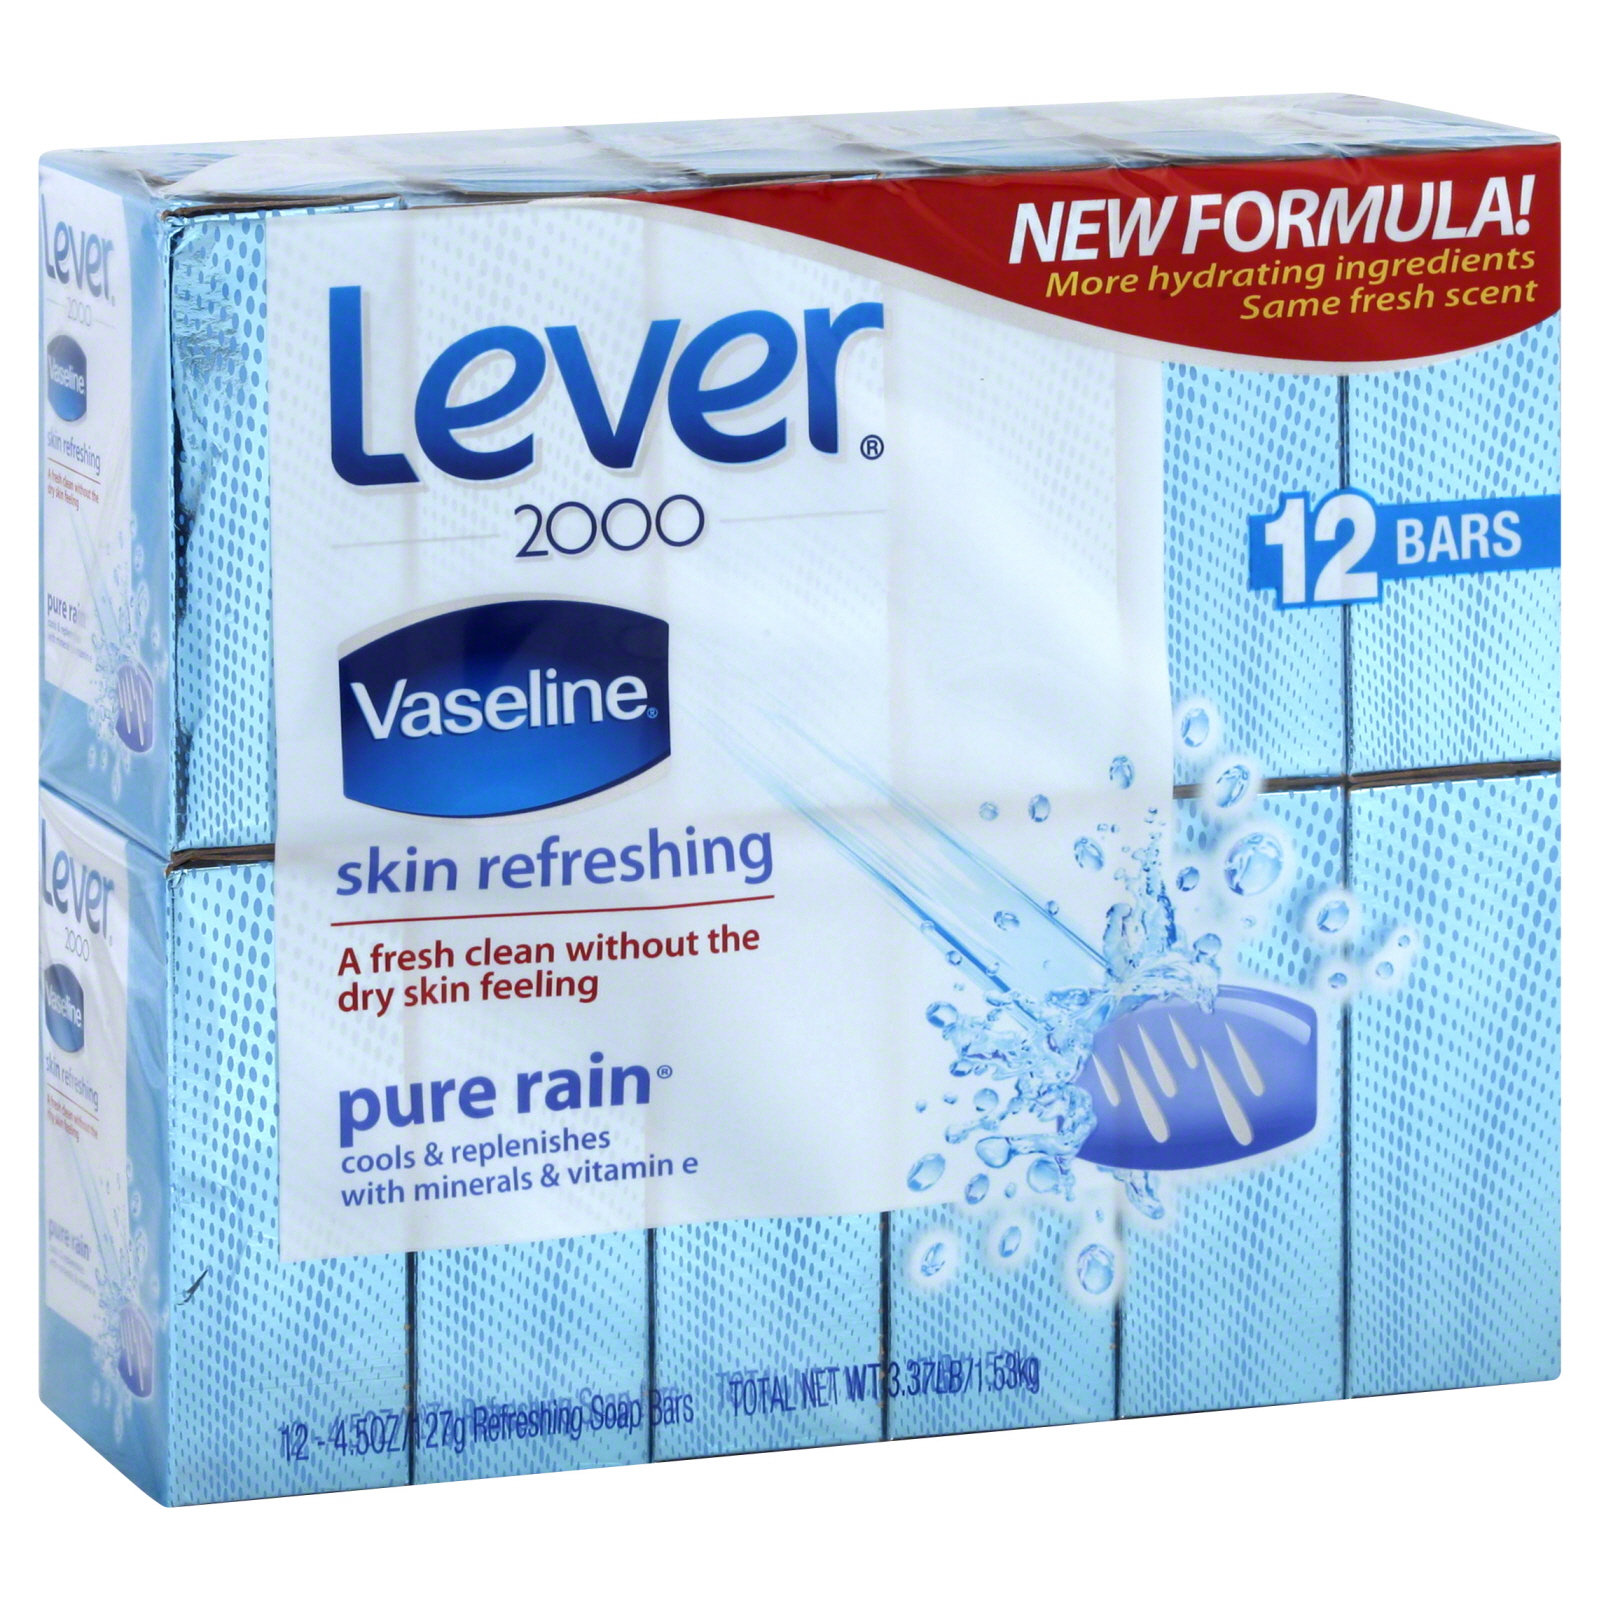 Lever 2000 Vaseline Soap Bars, Refreshing, Pure Rain, 12 - 4.5 oz (127 g) bars [3.37 lb (1.53 kg)]